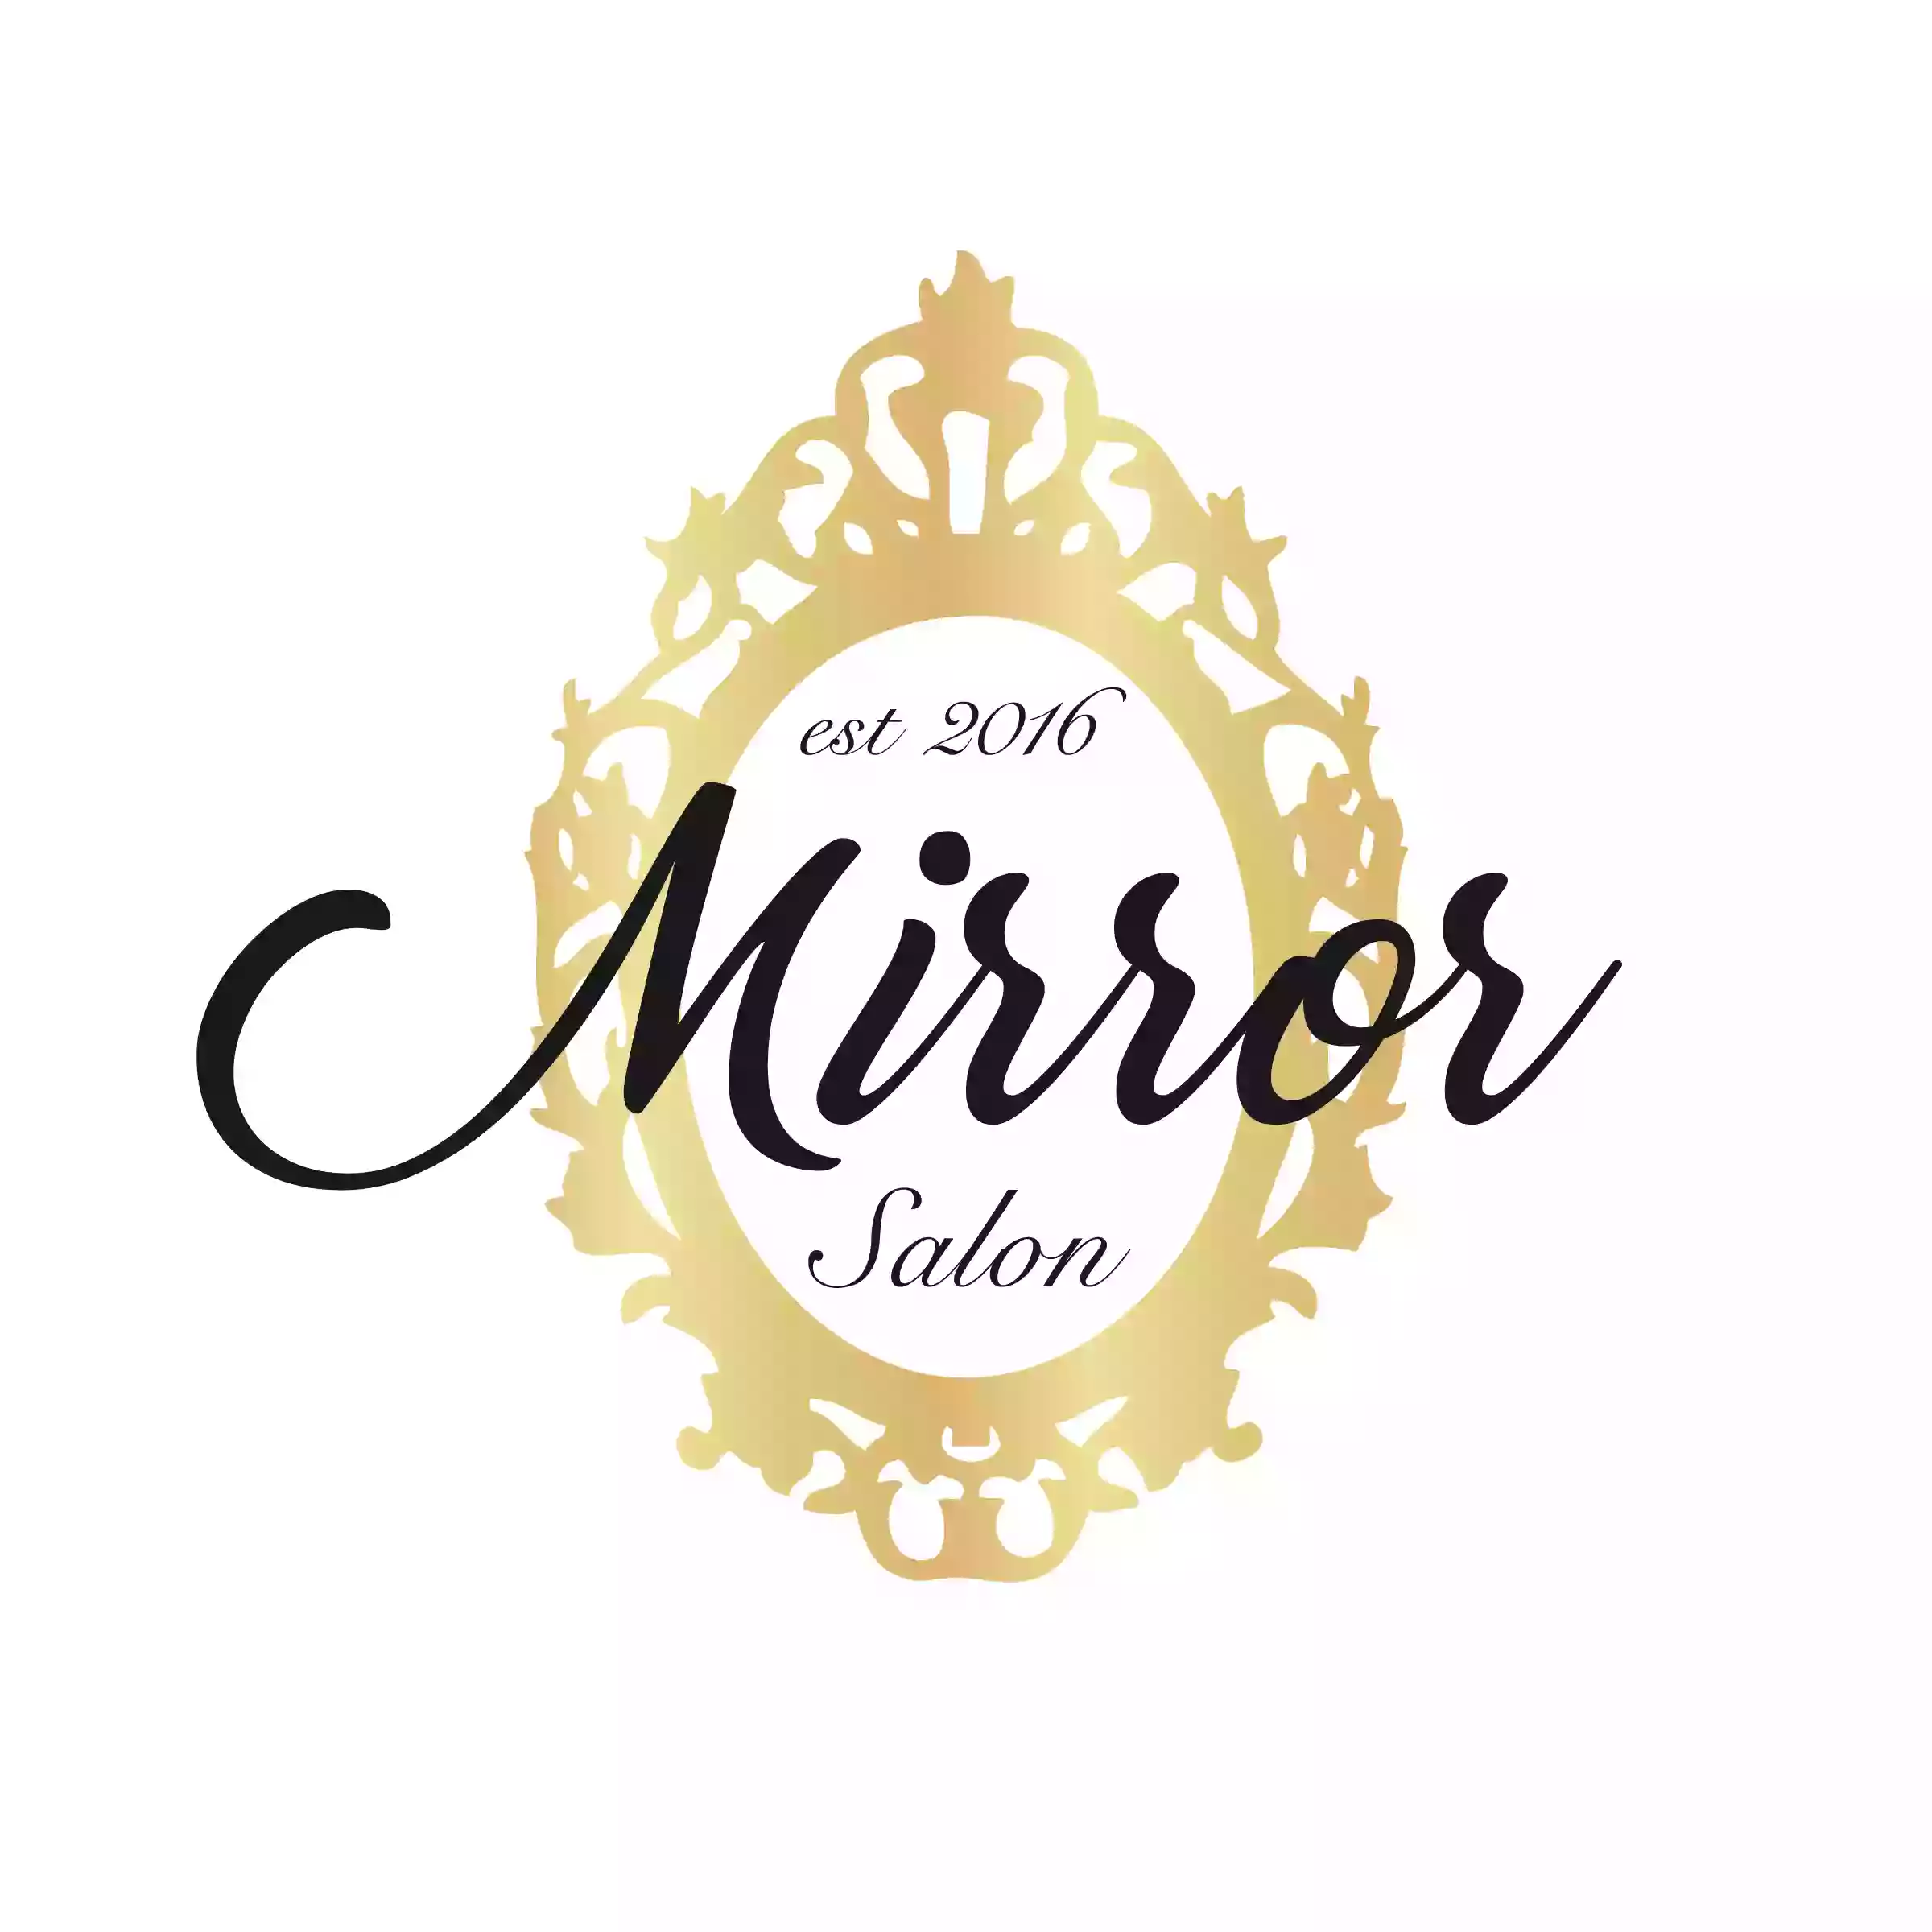 Mirror Salon